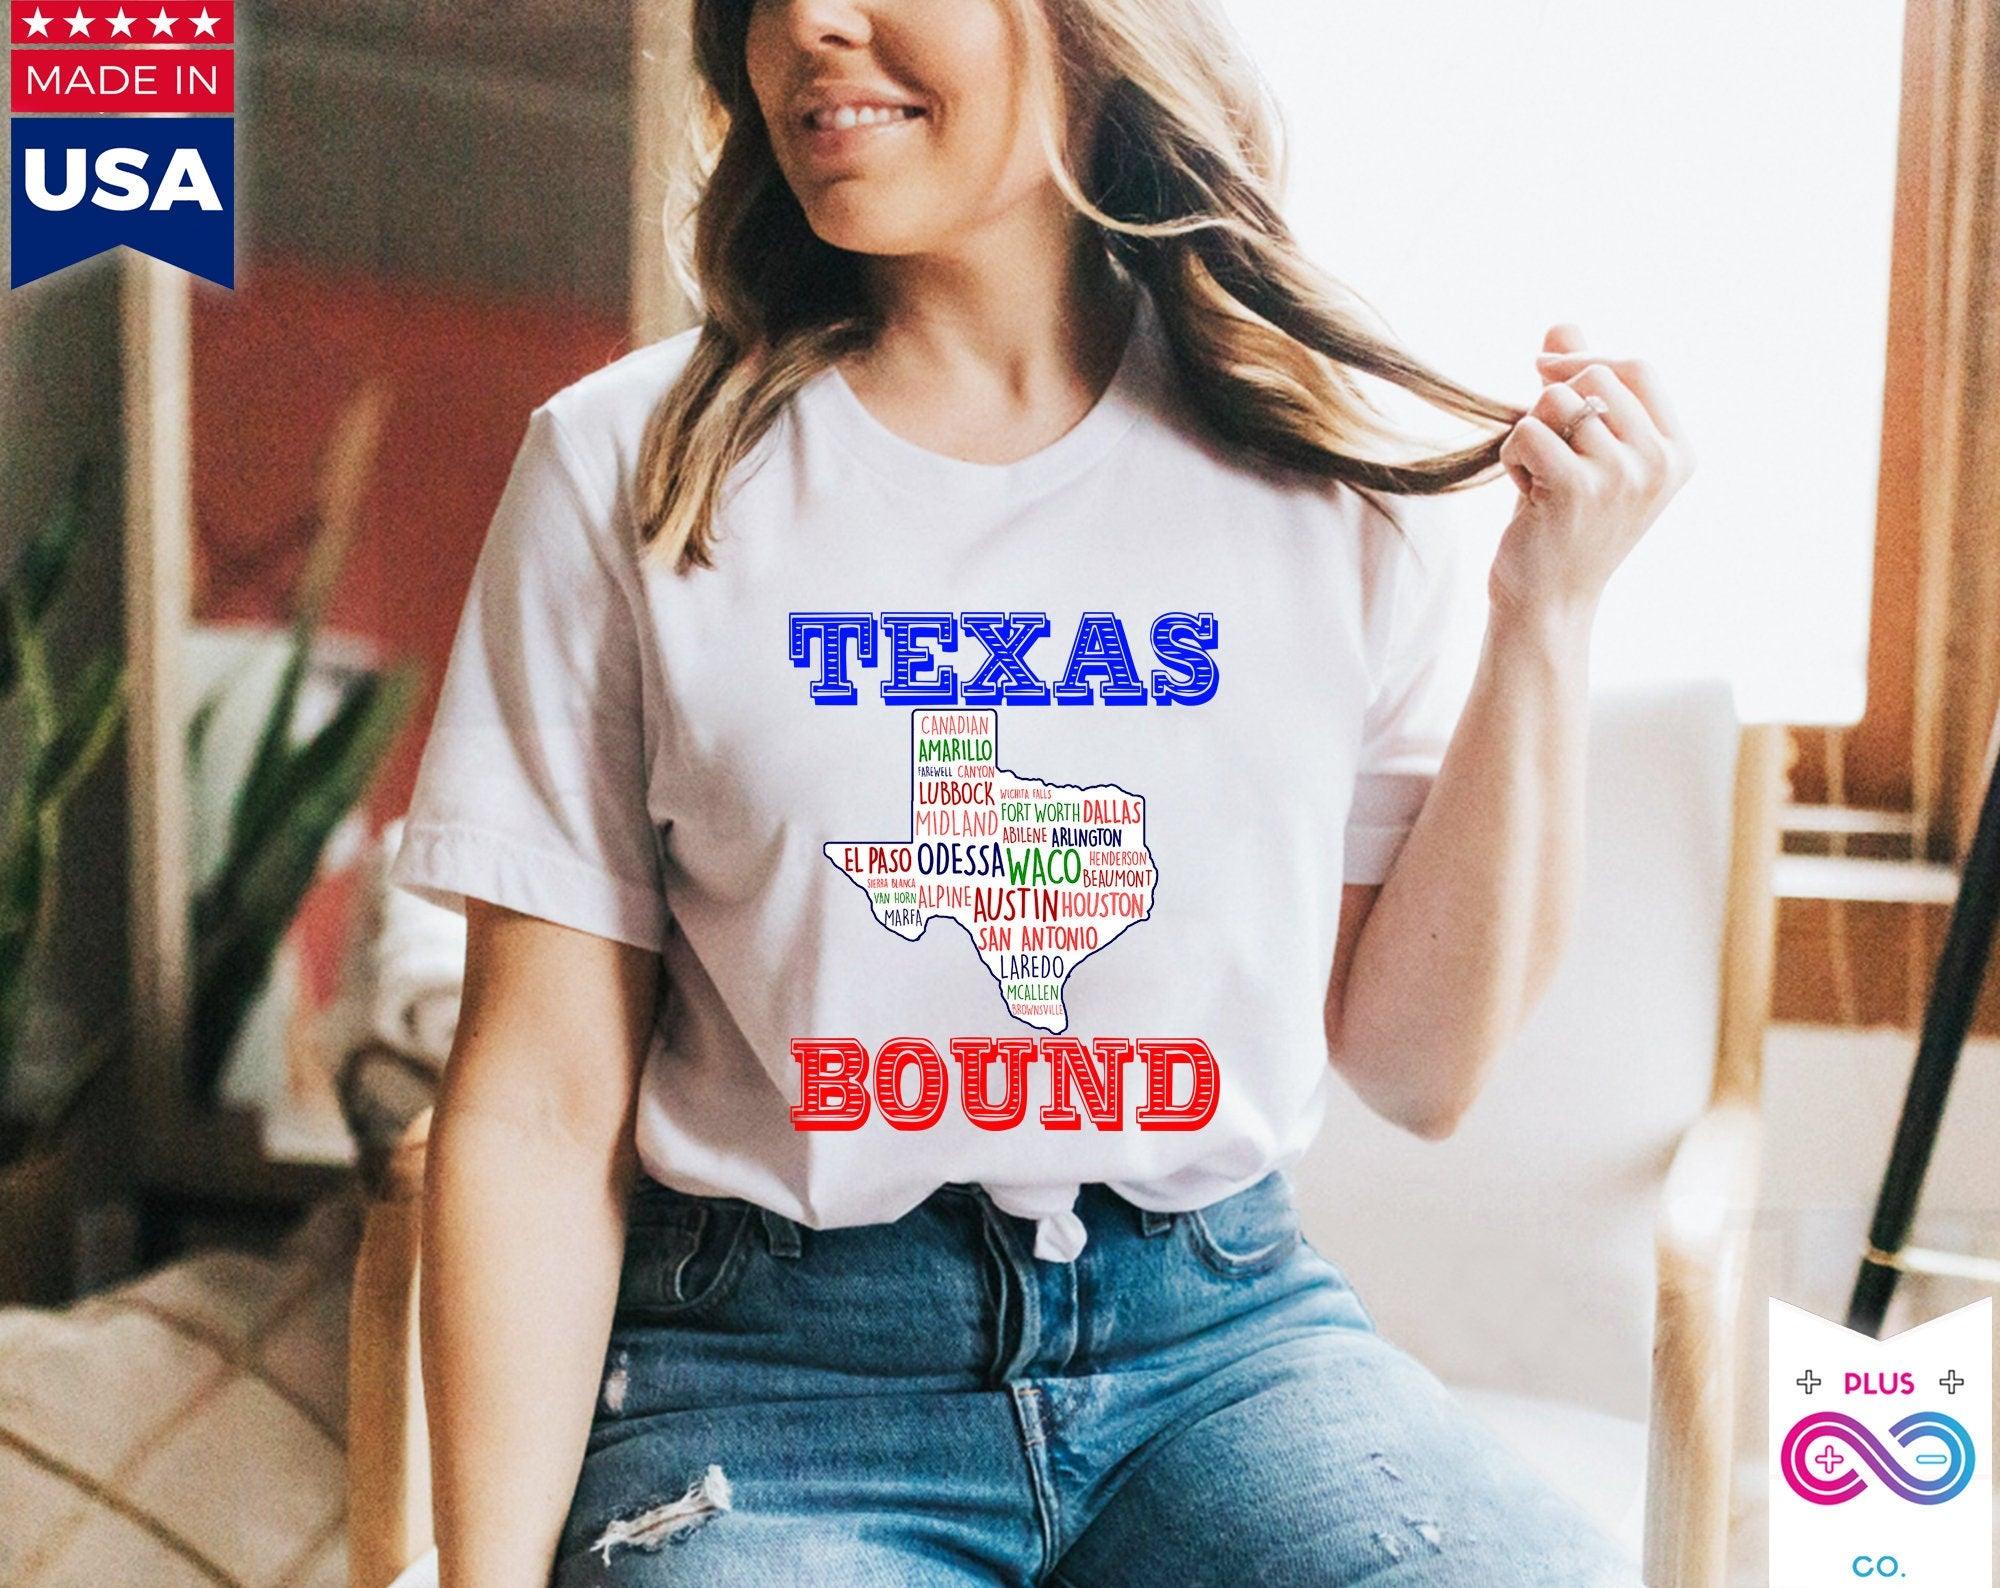 Texas bundet | Texas Places T-shirts |Texas Map T-shirts, Flytning til Austin, Velkommen til Texas Gift, Texas Bound, Ny i Texas, Flytning til DFW Beat biden skattestigning, Biden skatteplan, kystliberal, Houston, flytter til austin, Flytning til DFW, Flytter til Texas, Flytter til Texas-krus, Ny i Texas, Republikaner, Tee, T-shirts, bundet til Texas, texas pige, texas republikansk i - plusminusco.com